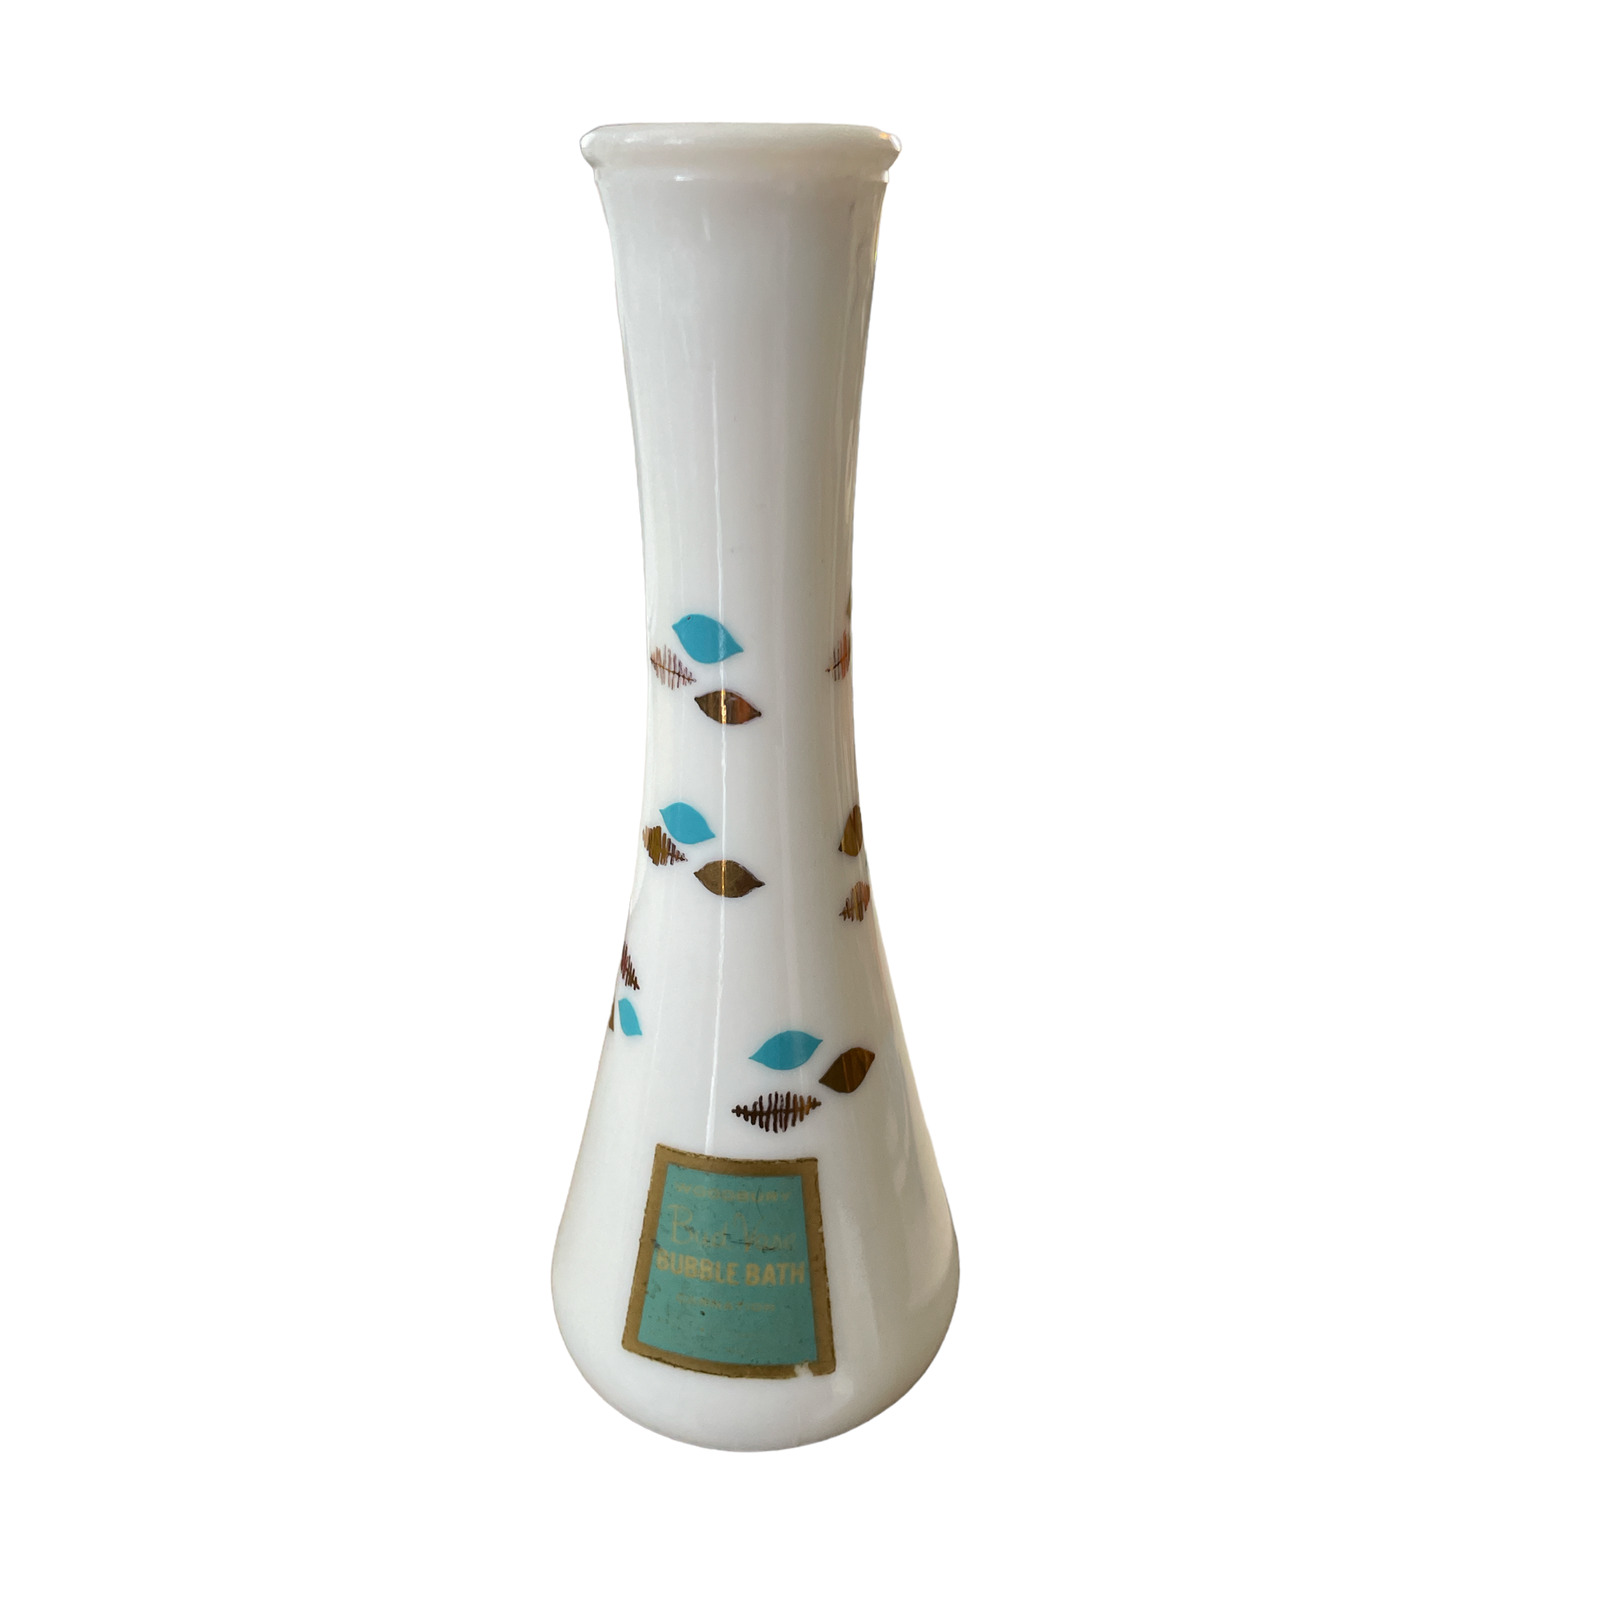 Woodbury White Milk Glass Bud Vase Bubble Bath Carnation Container 8” Empty